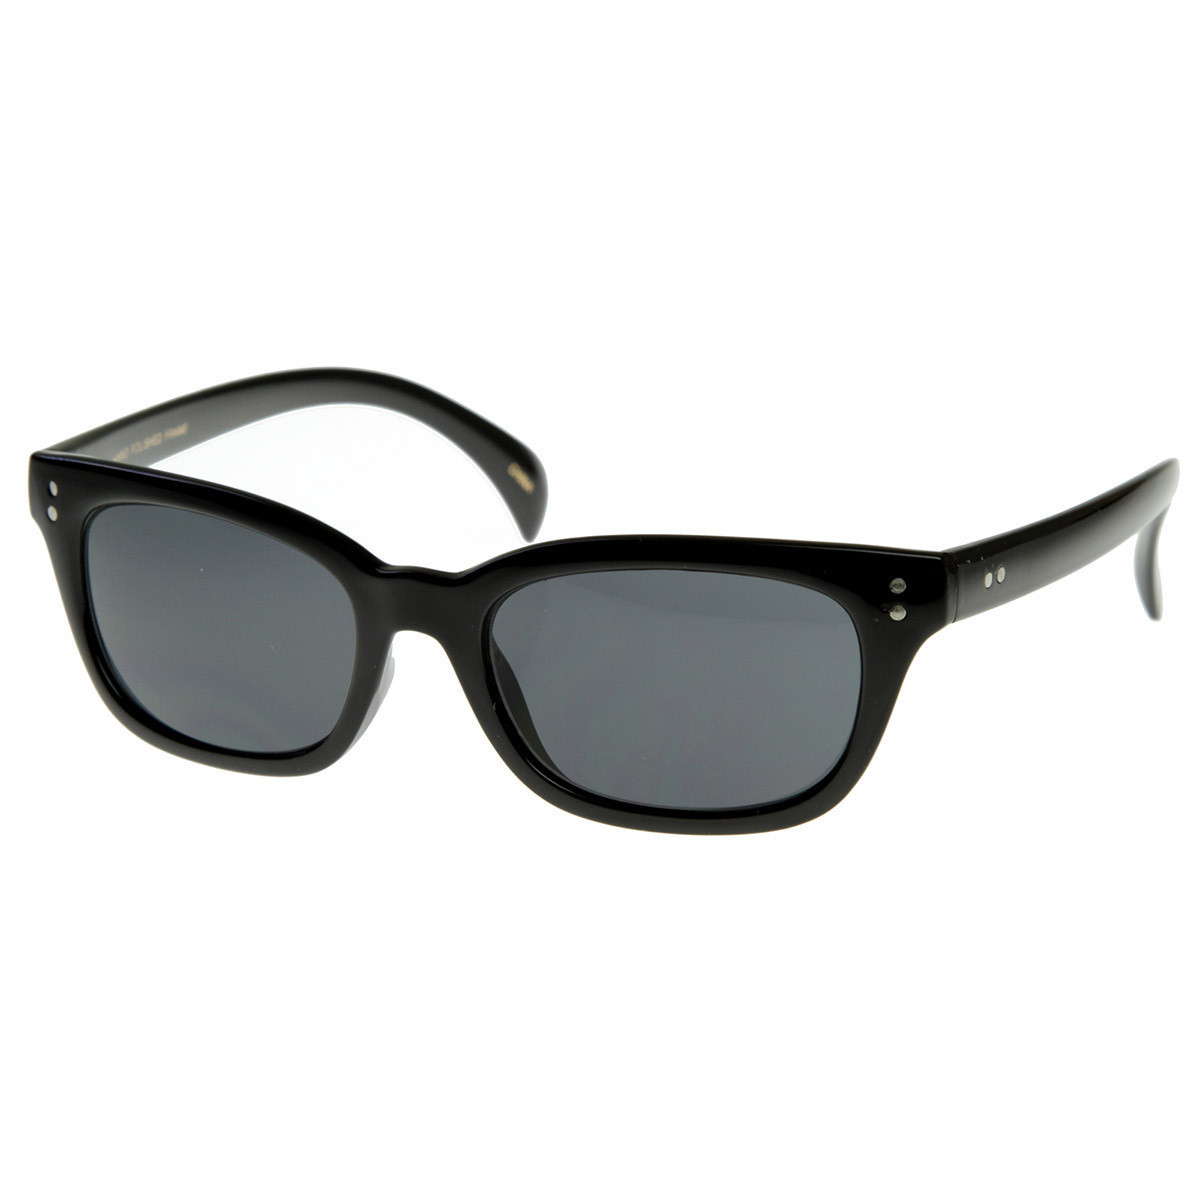 New Vintage Bold Premium ZeroUV Quality Small Oval Horned Rim Sunglasses - 8367 - Black